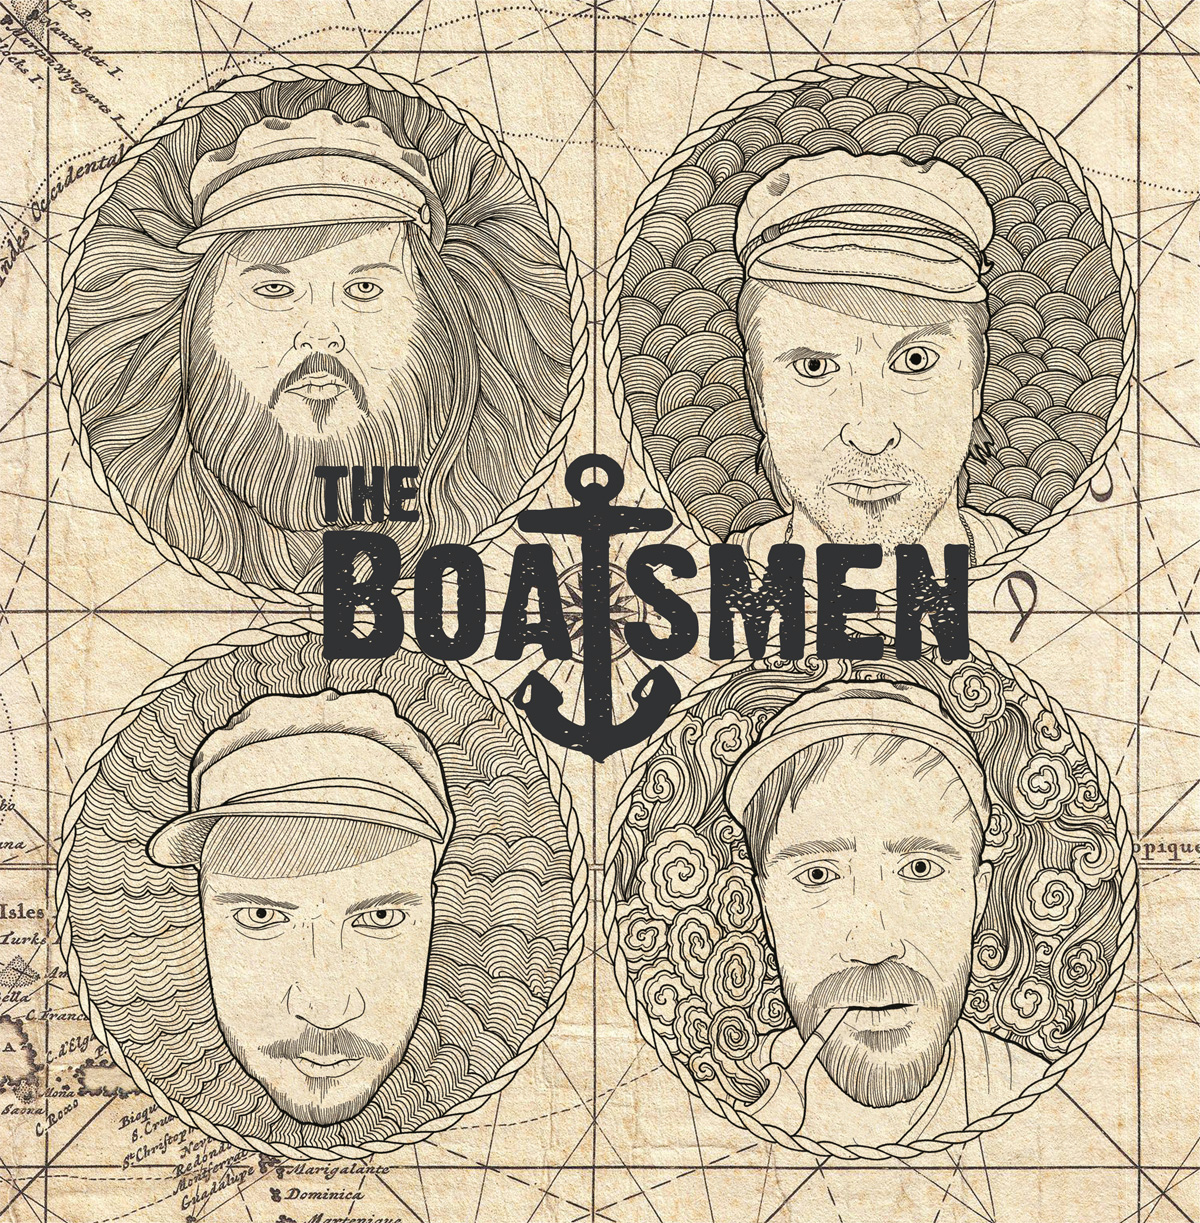 zl48-the_boatsmen-the_boatsmen-12_inch_3mm_spined_sleeve